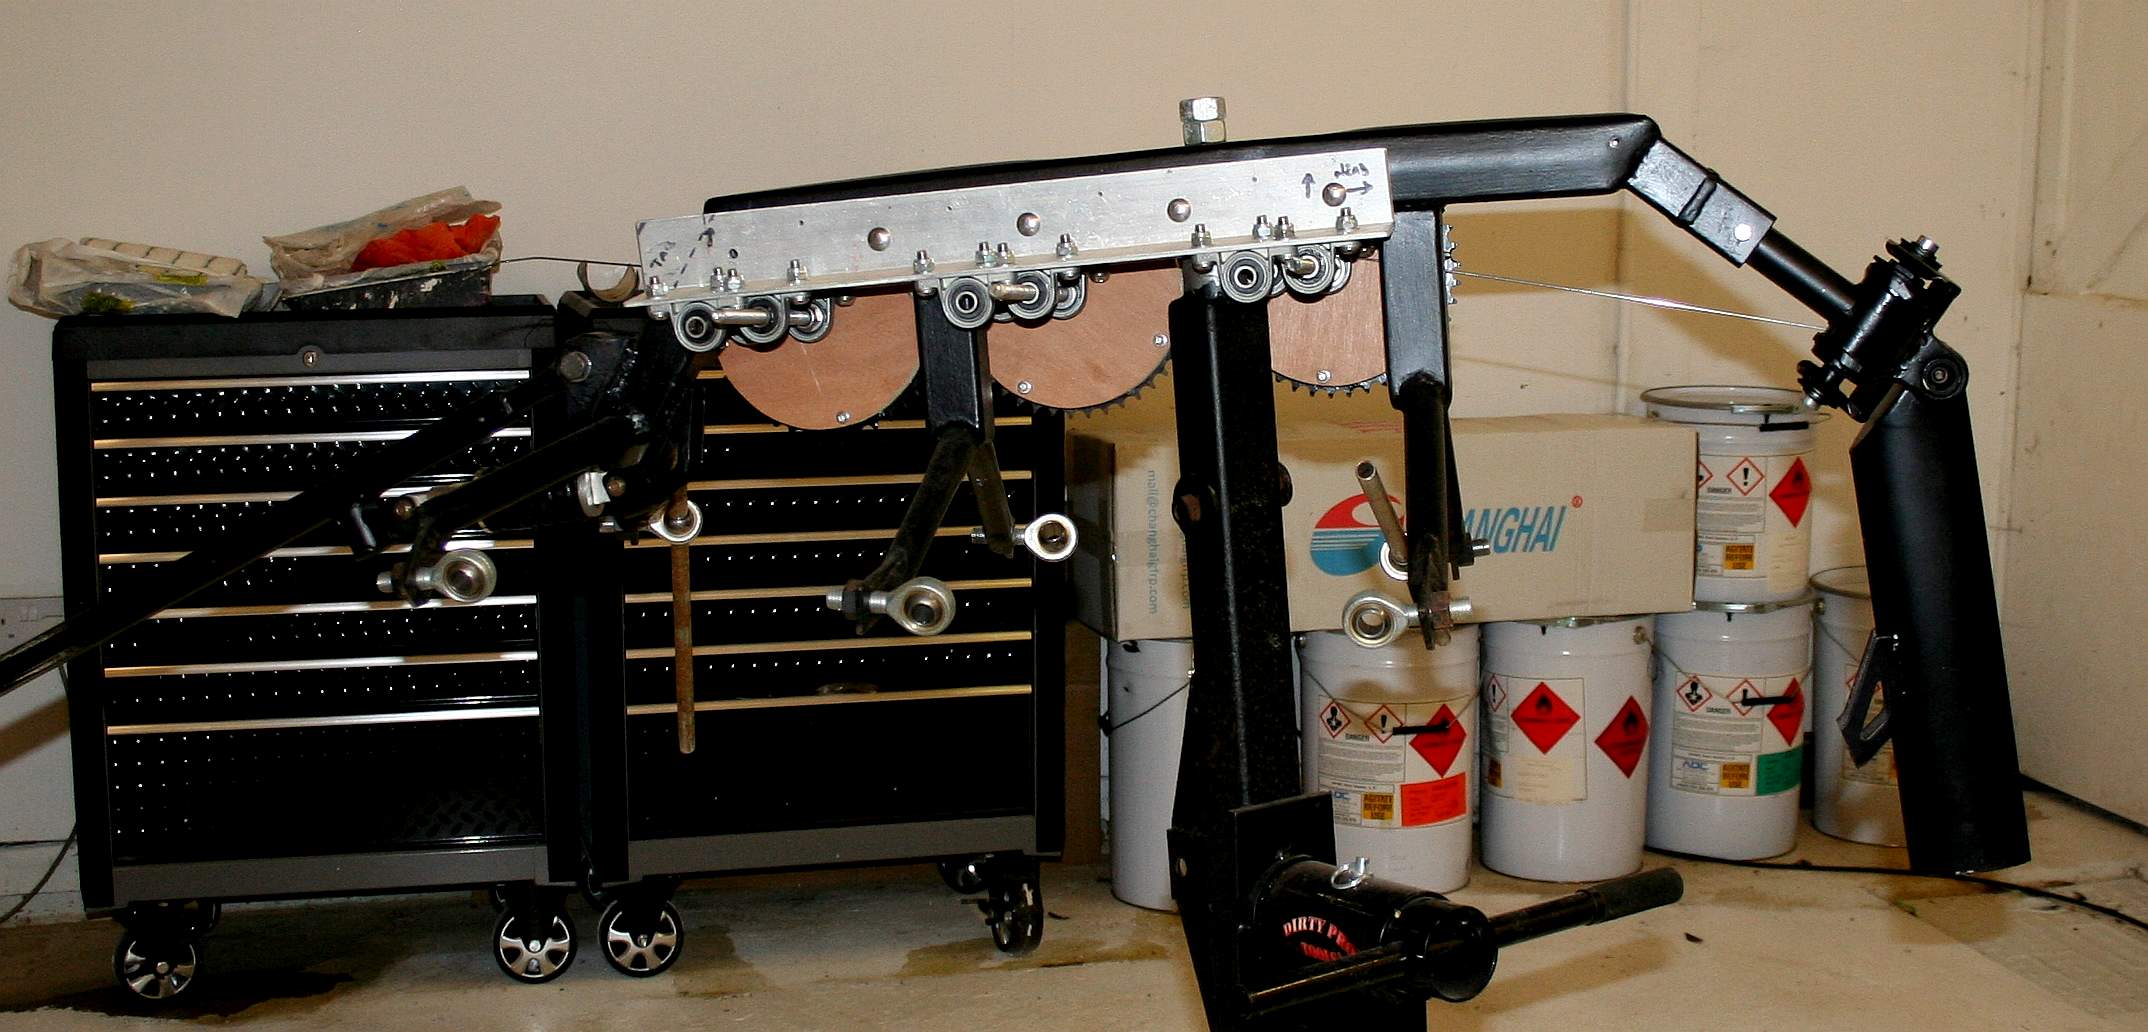 Prototype frame for a giant hexapod robot